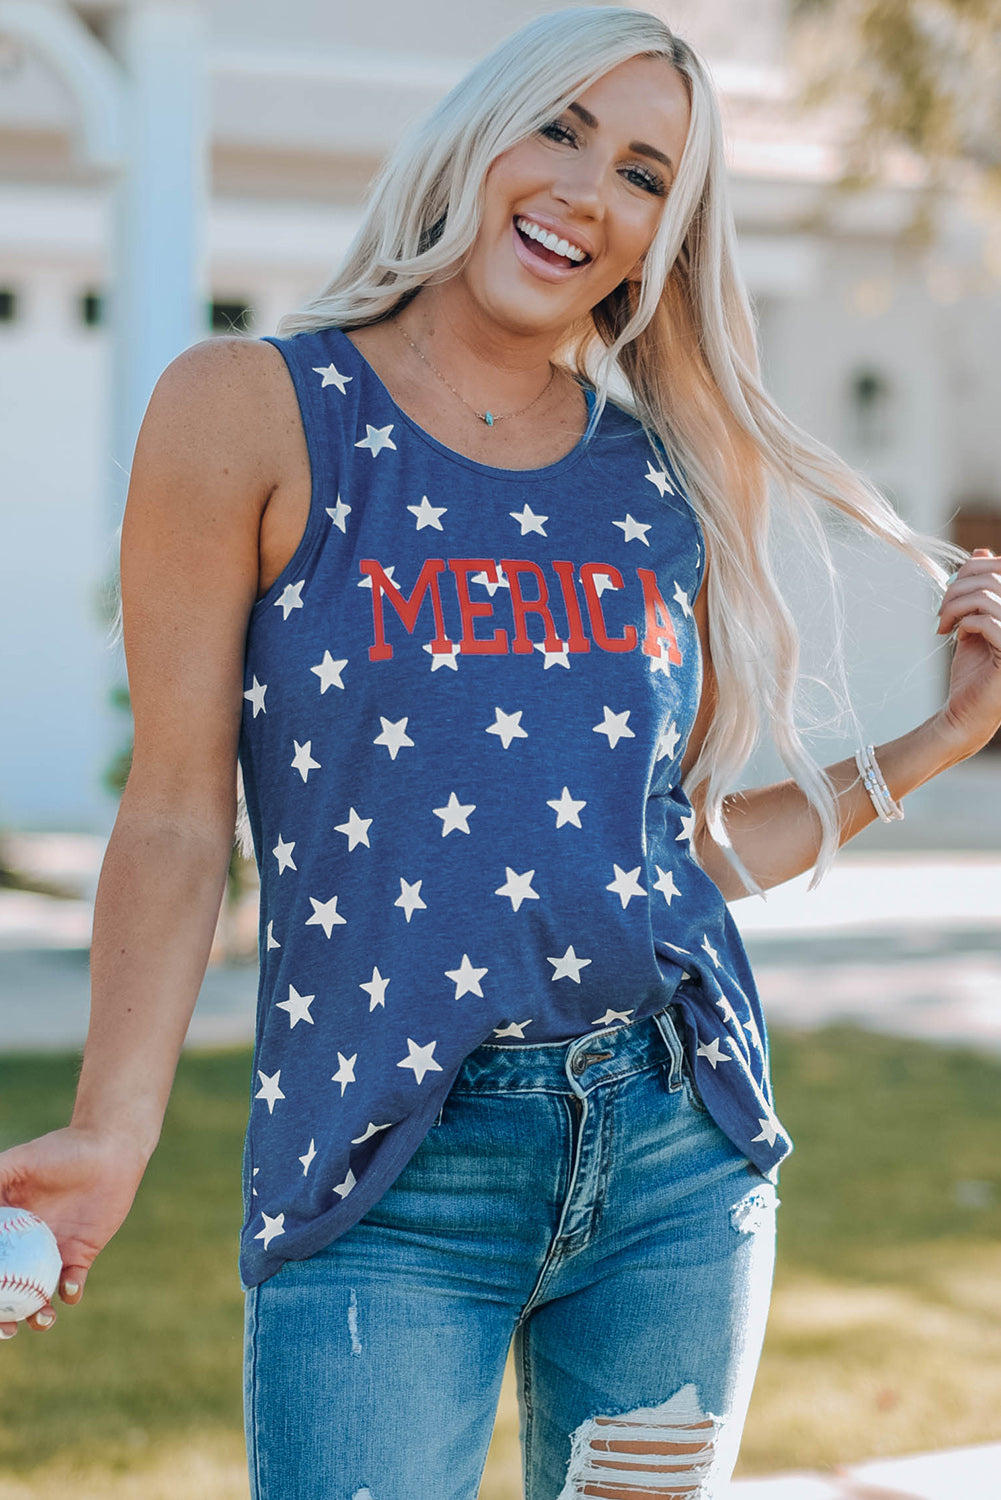 MERICA Star Print American Round Neck Shirt Sleeveless Tank Top (Plus Size Available)